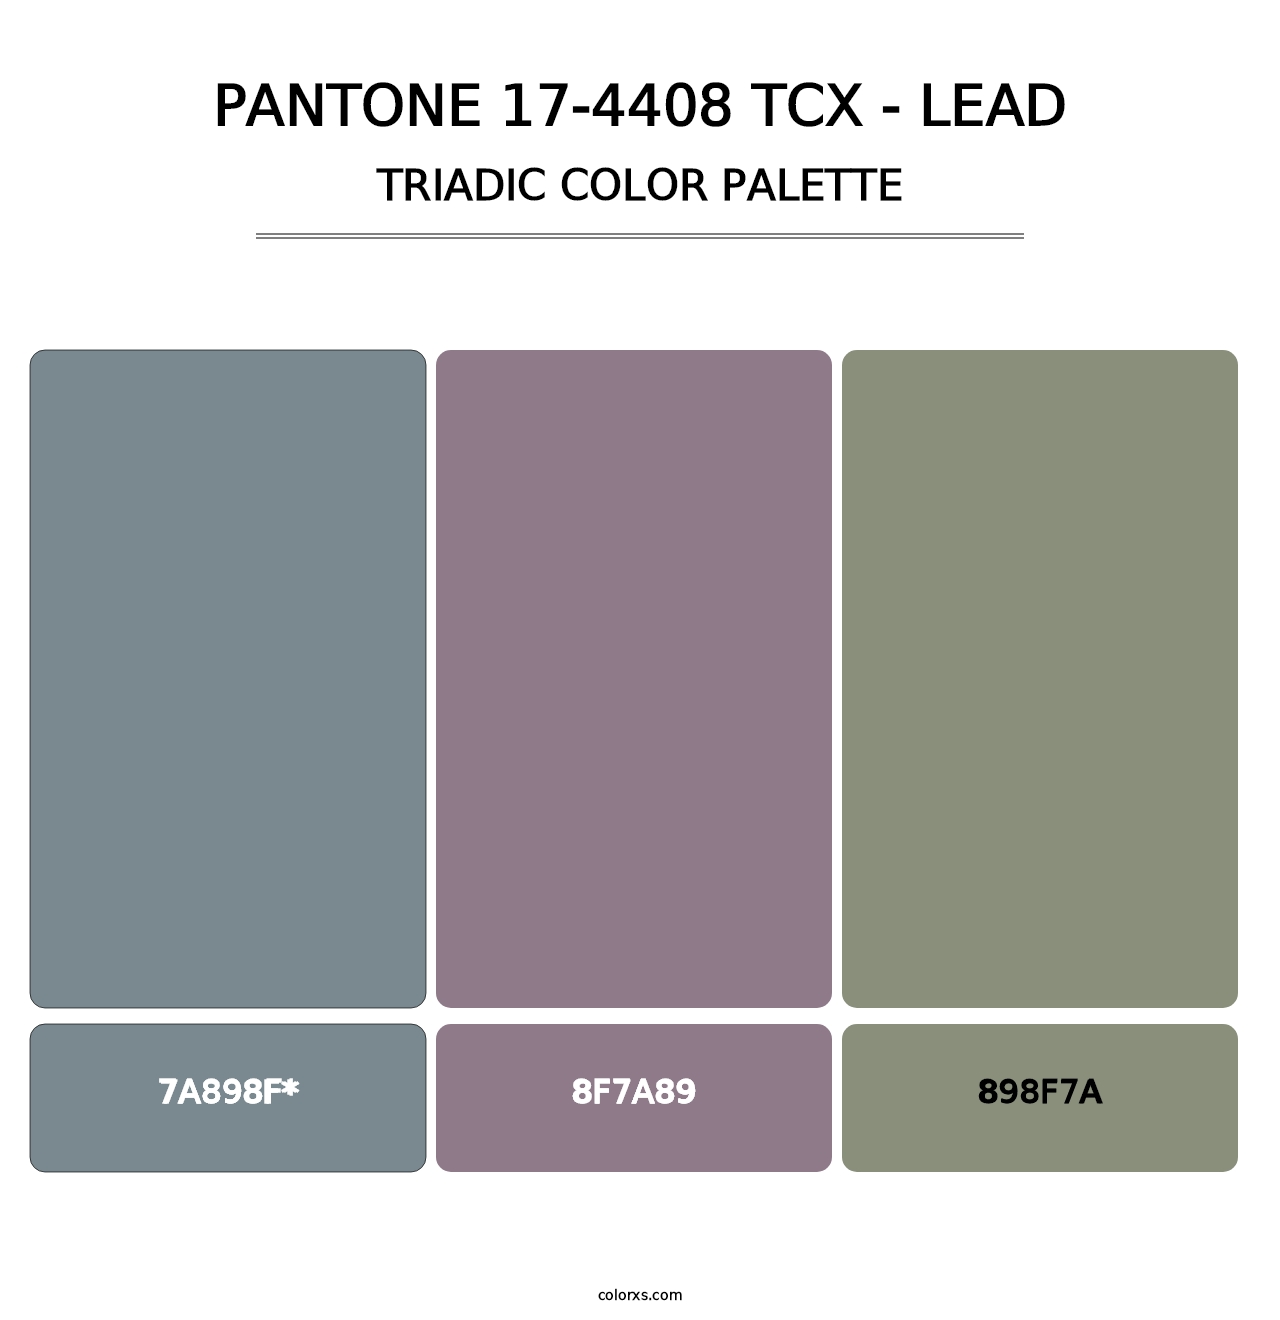 PANTONE 17-4408 TCX - Lead - Triadic Color Palette